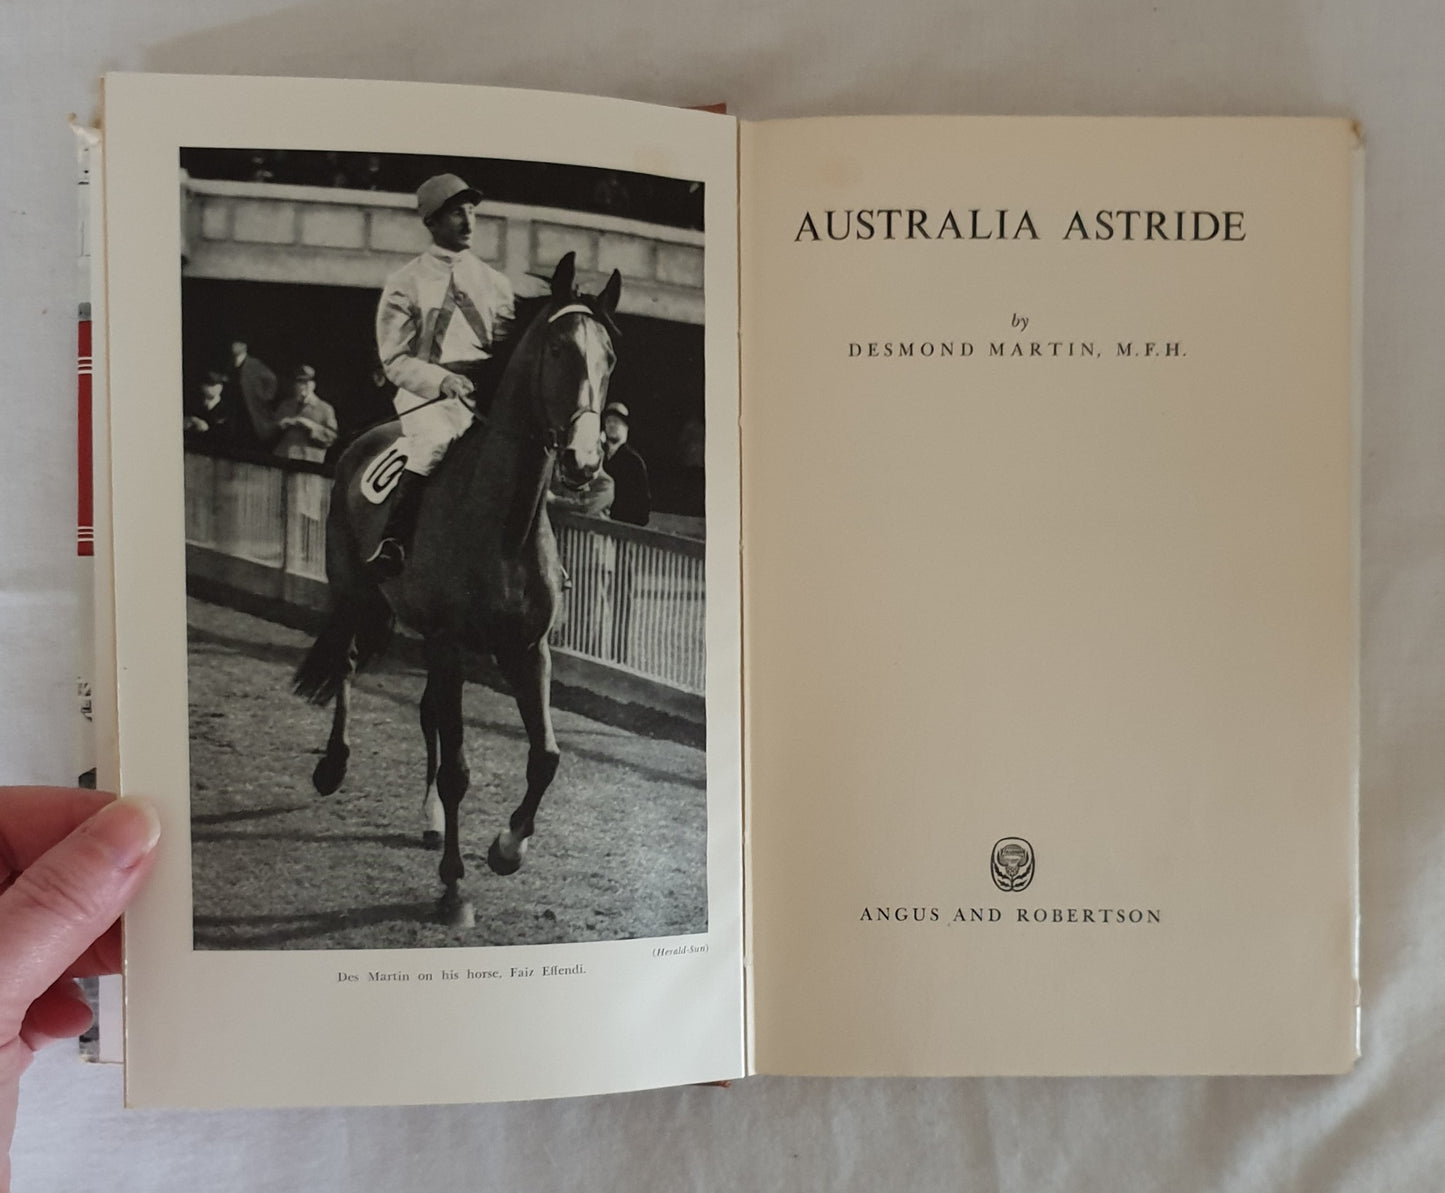 Australia Astride by Des Martin